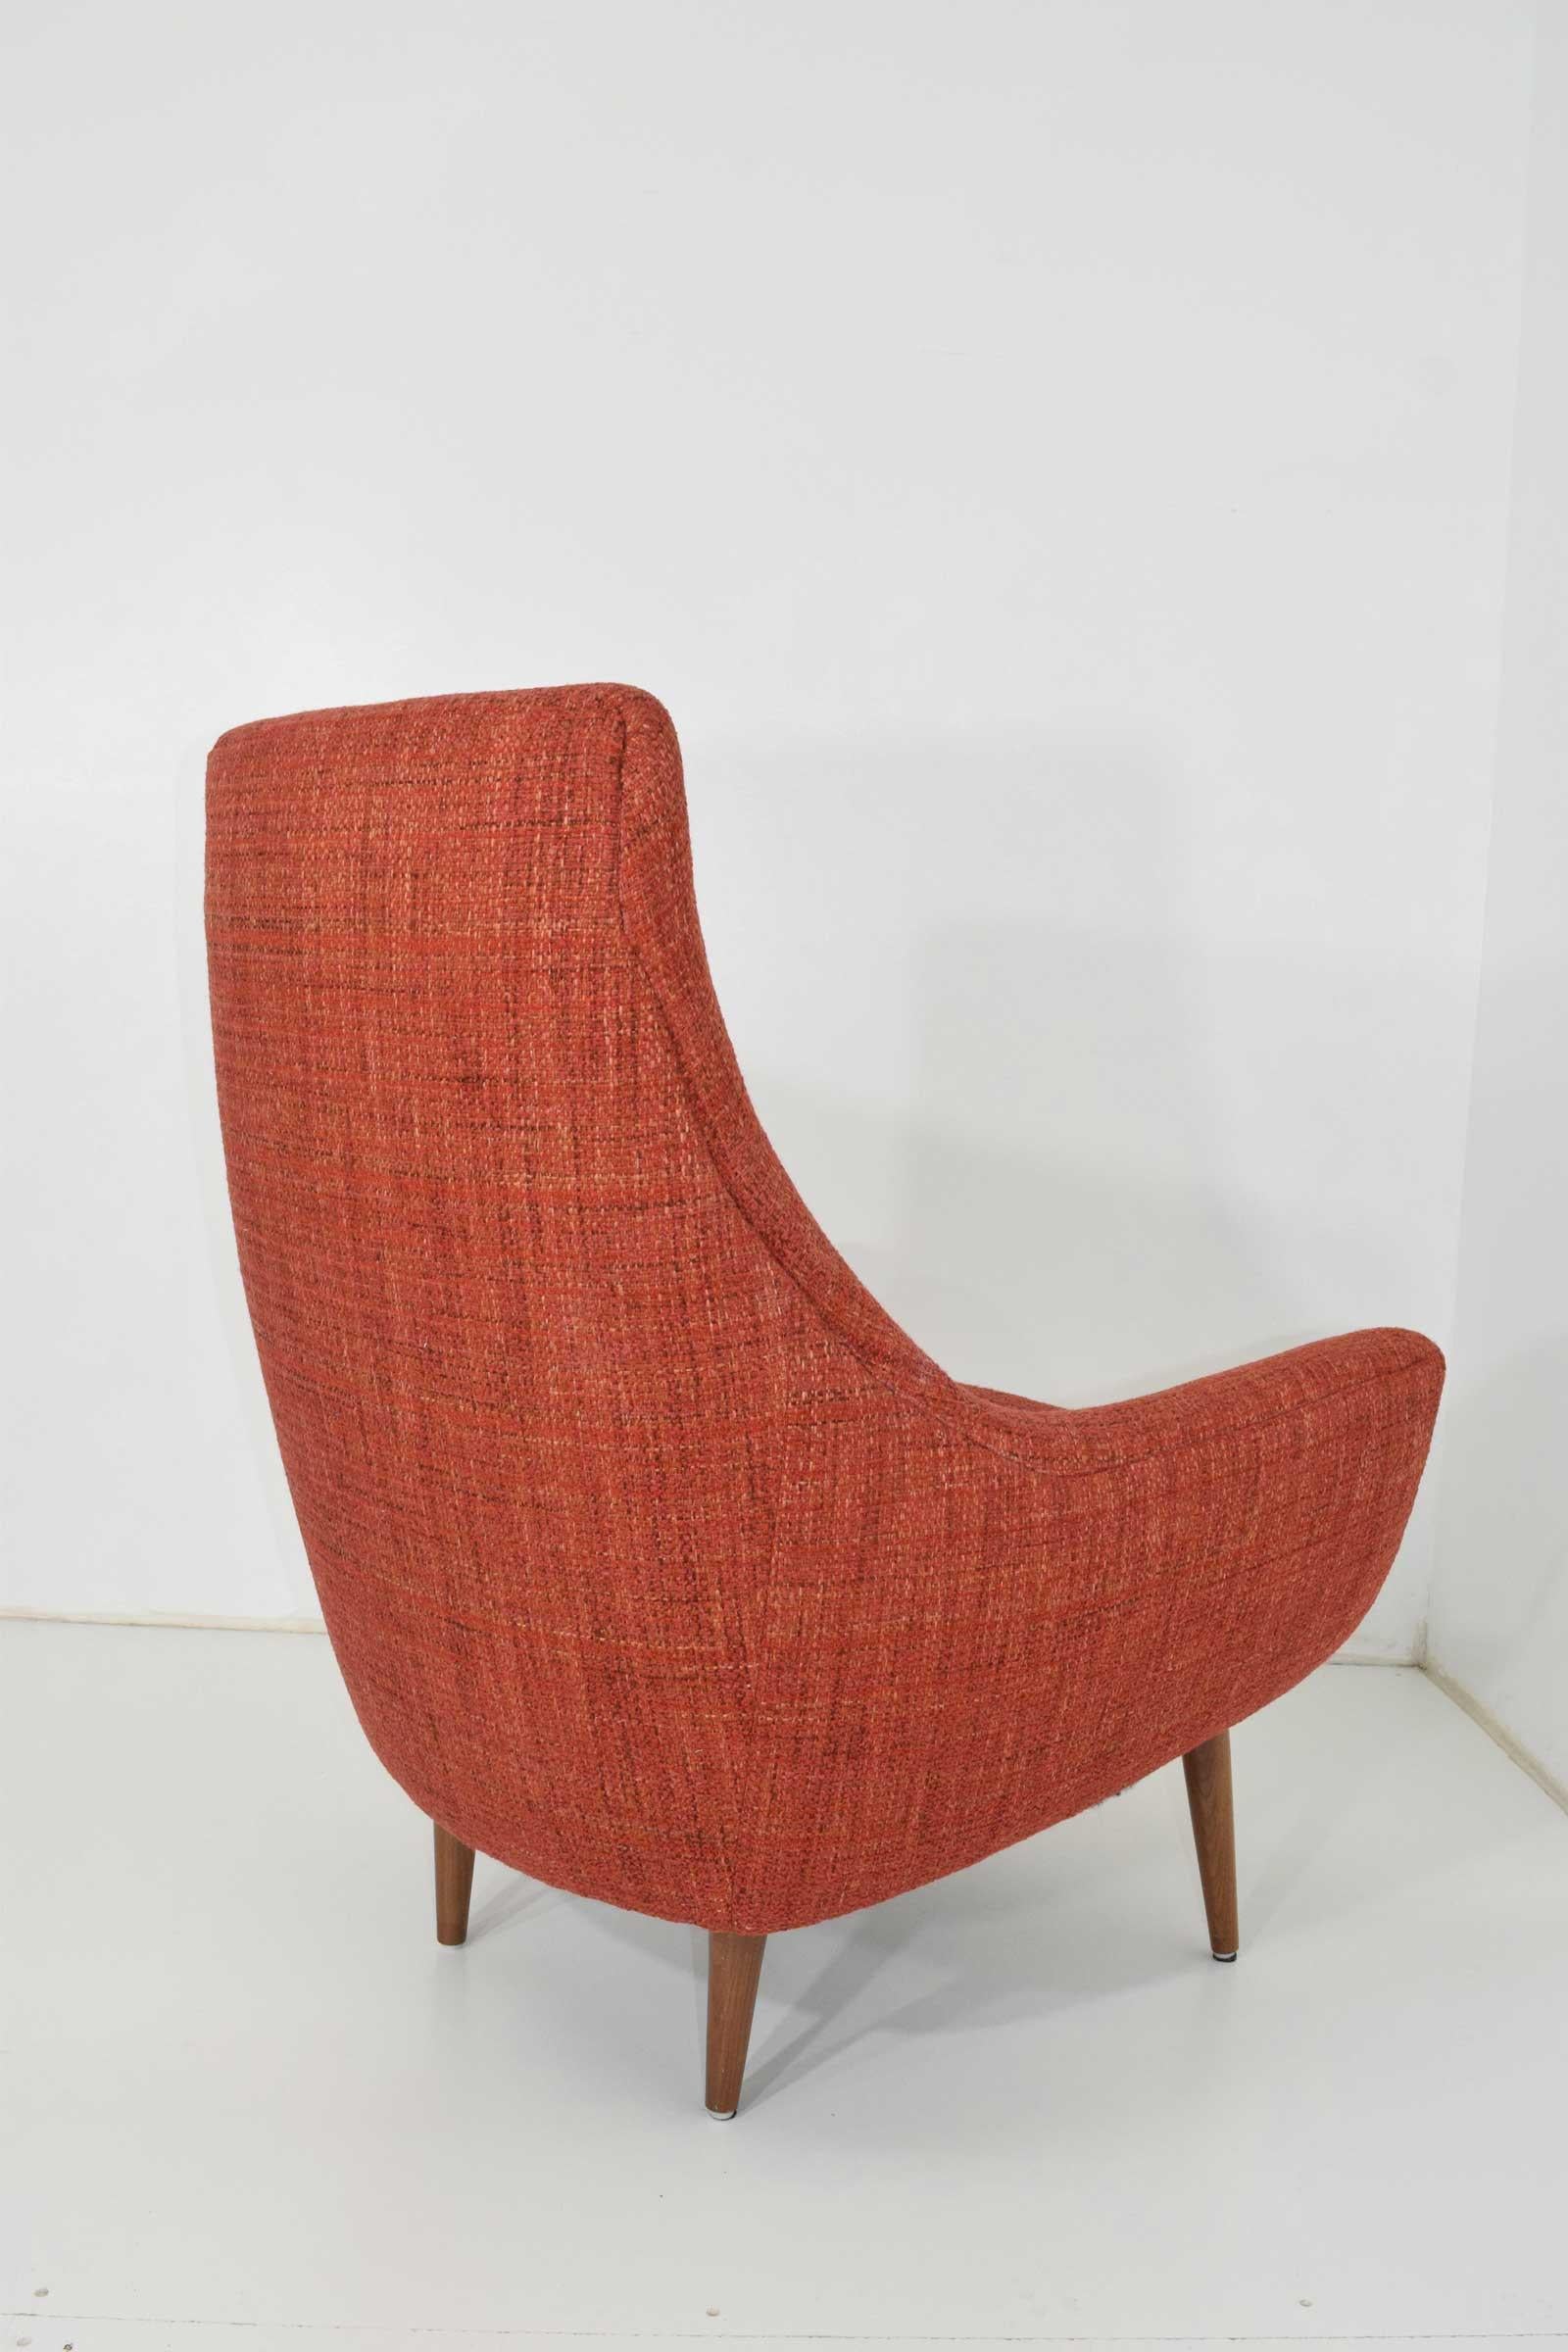 American Mid-Century Modern Lounge Chair